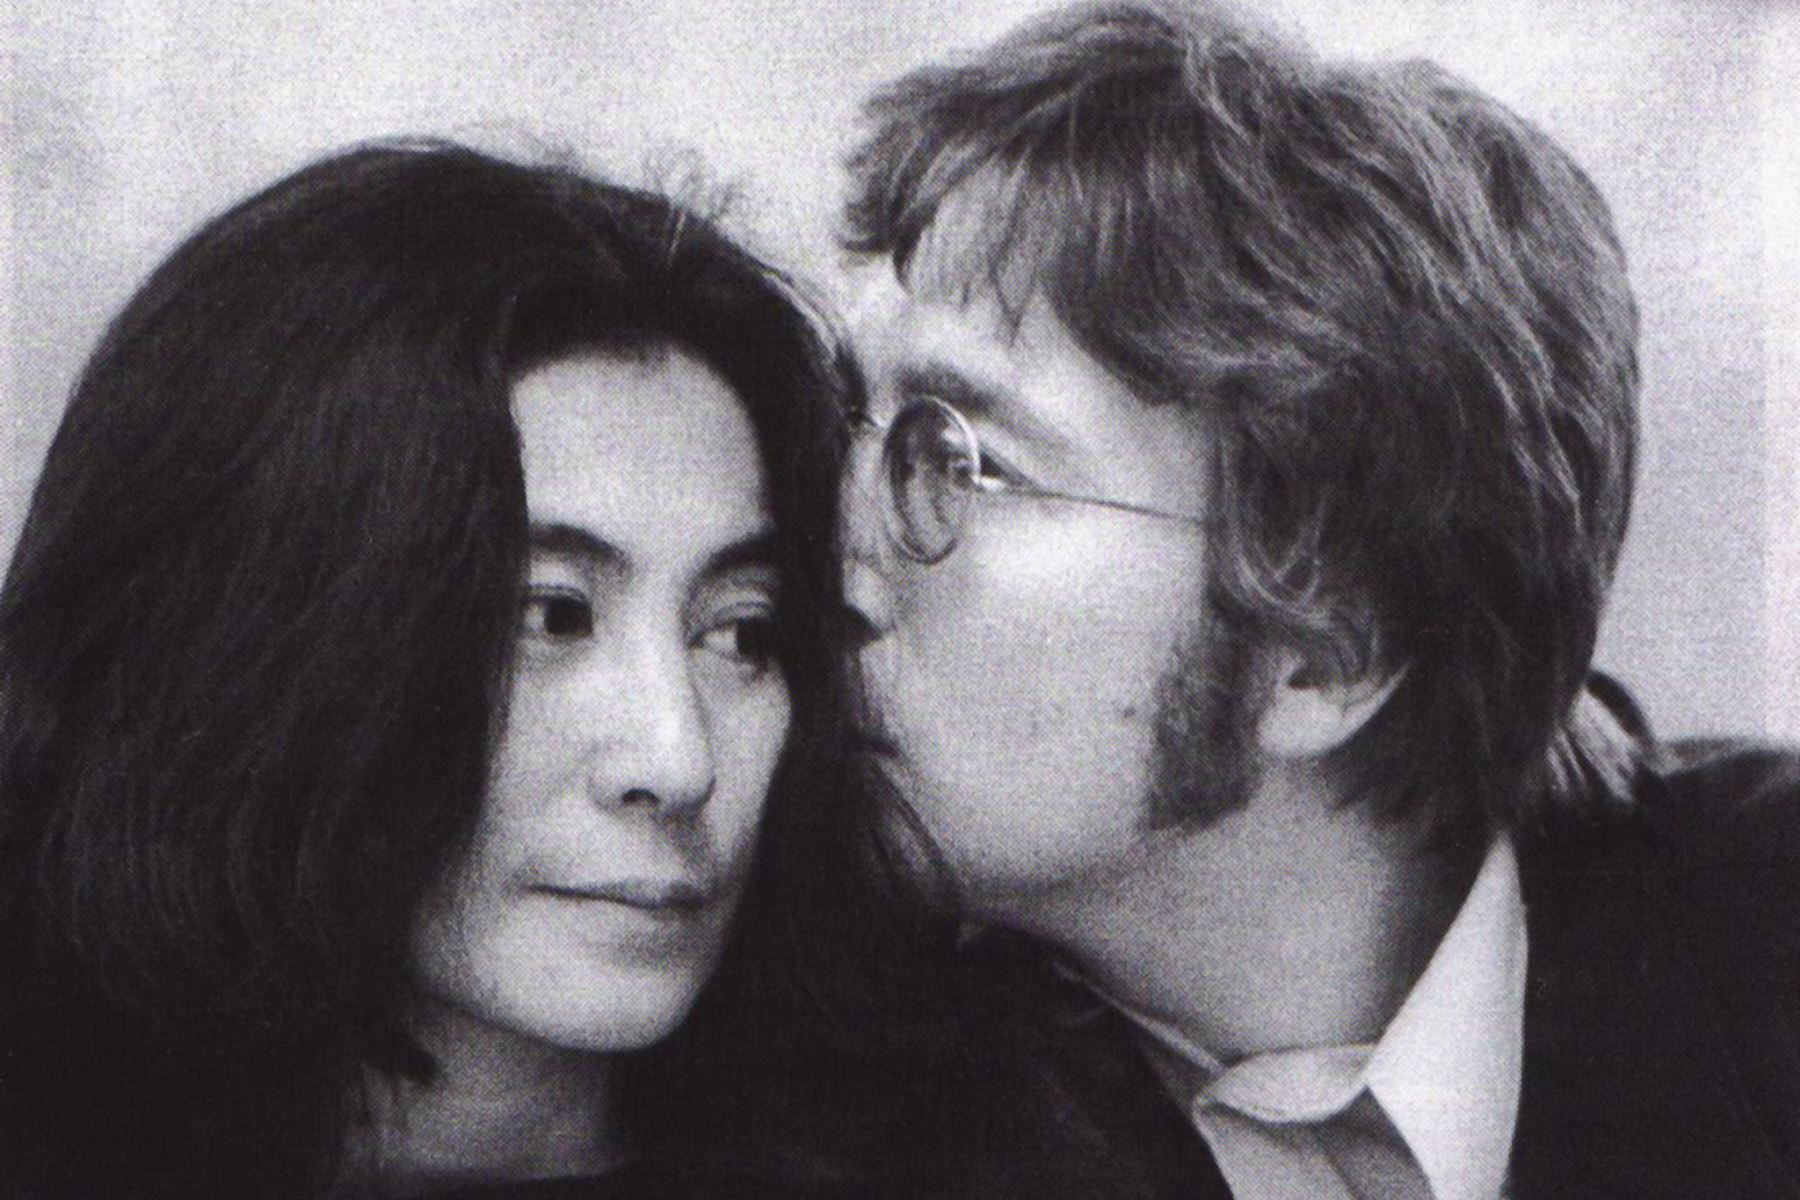 John Lennon y su esposa Yoko Ono 

Foto:Internet/Medios